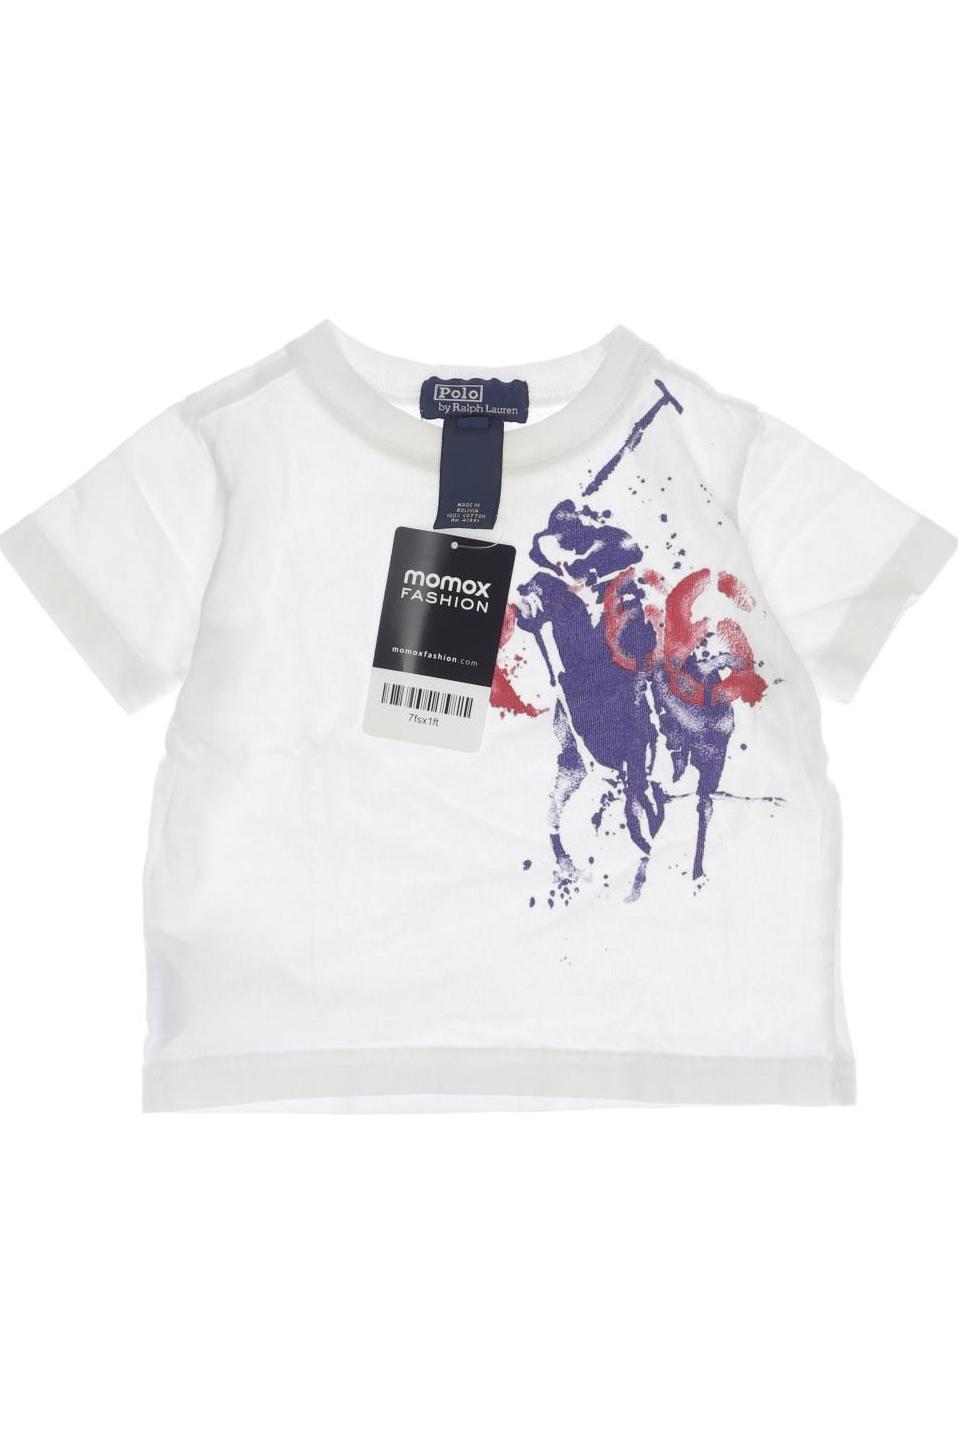 Polo Ralph Lauren Jungen T-Shirt, weiß von Polo Ralph Lauren